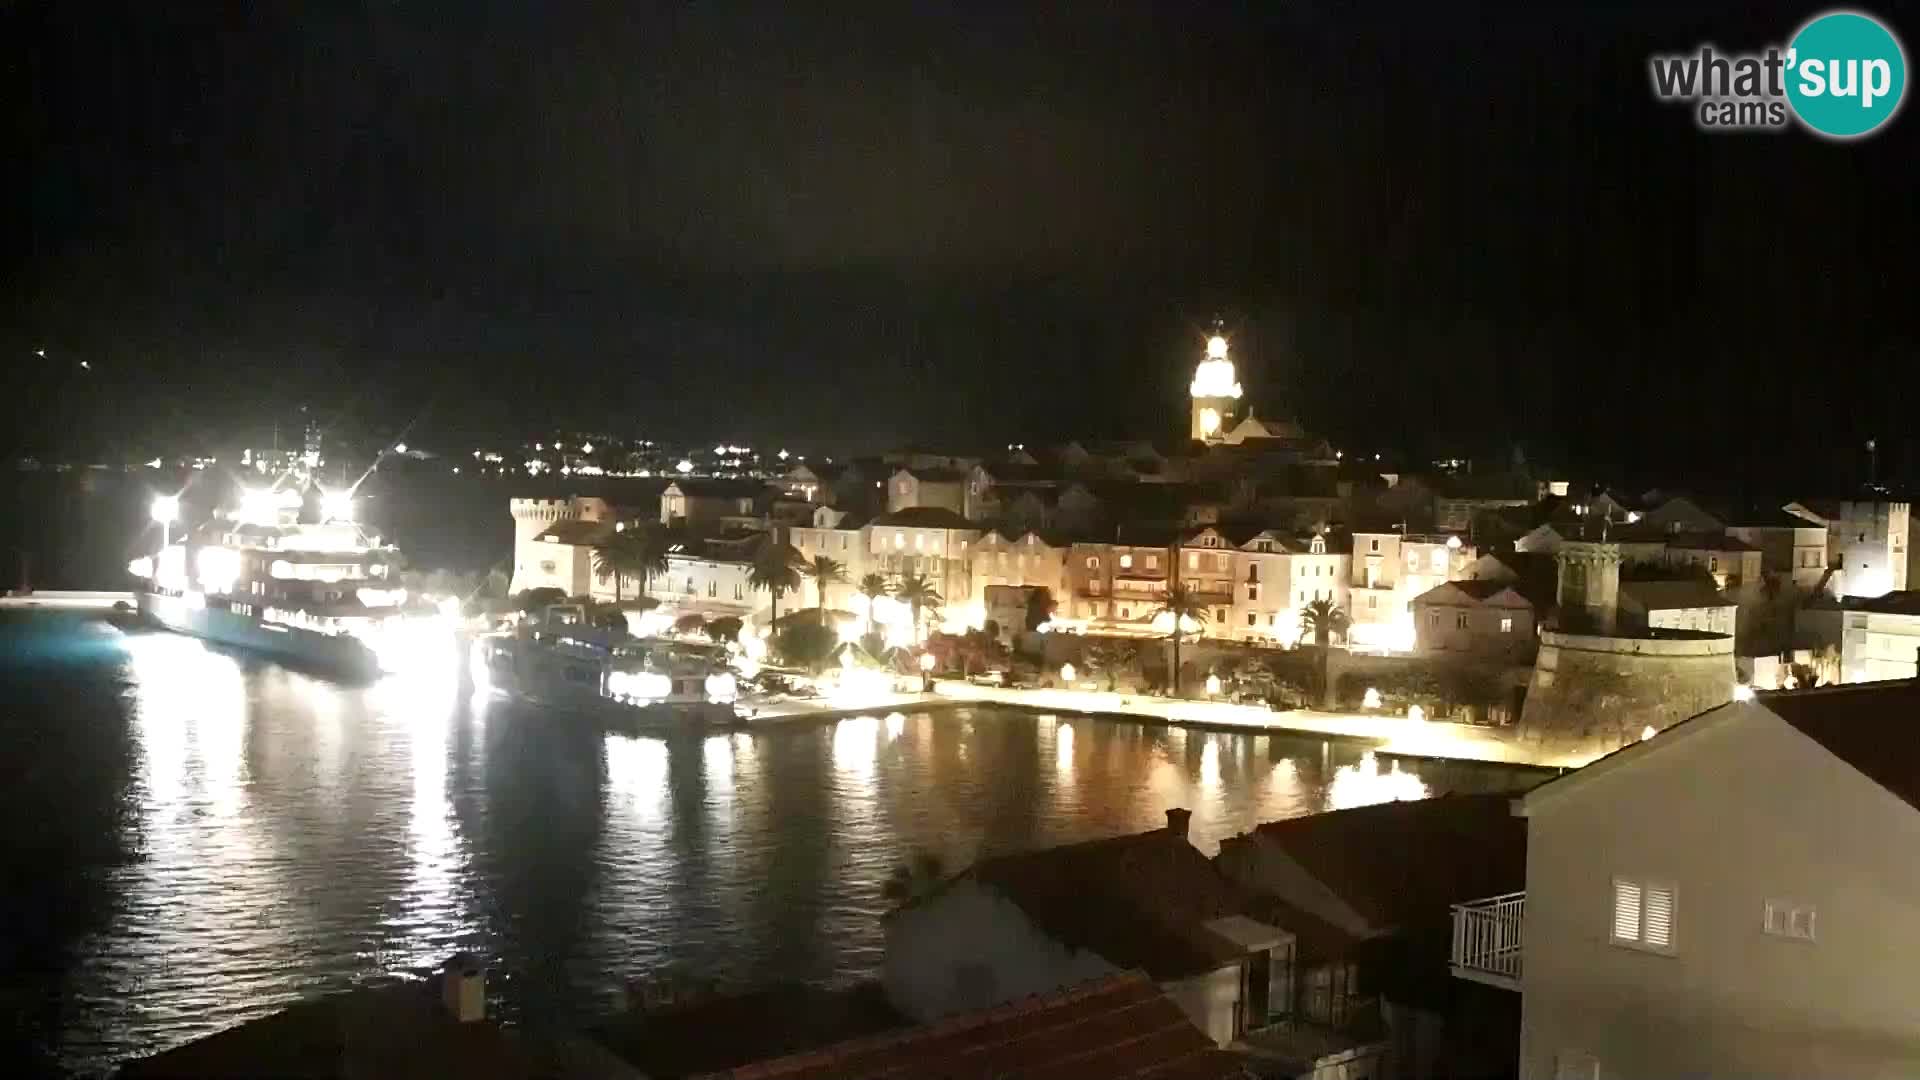 Panorama mesta Korčula kamera v živo